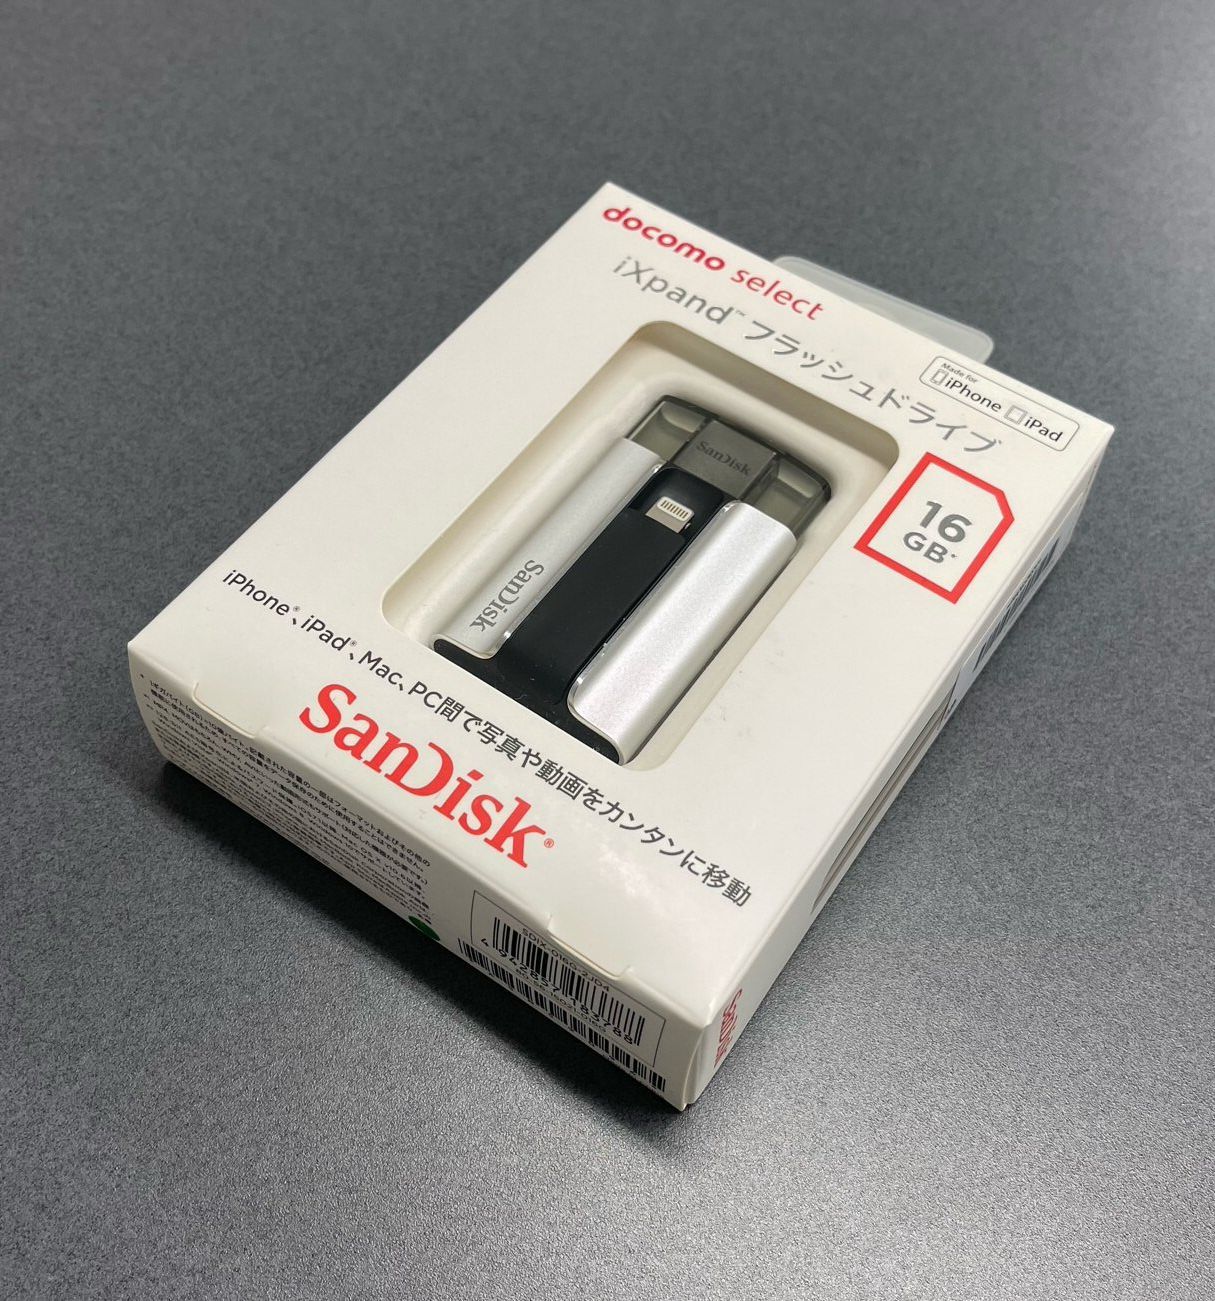 SanDisk】iXpand フラッシュドライブ 【16GB】 ※新品・未開封 - メルカリ